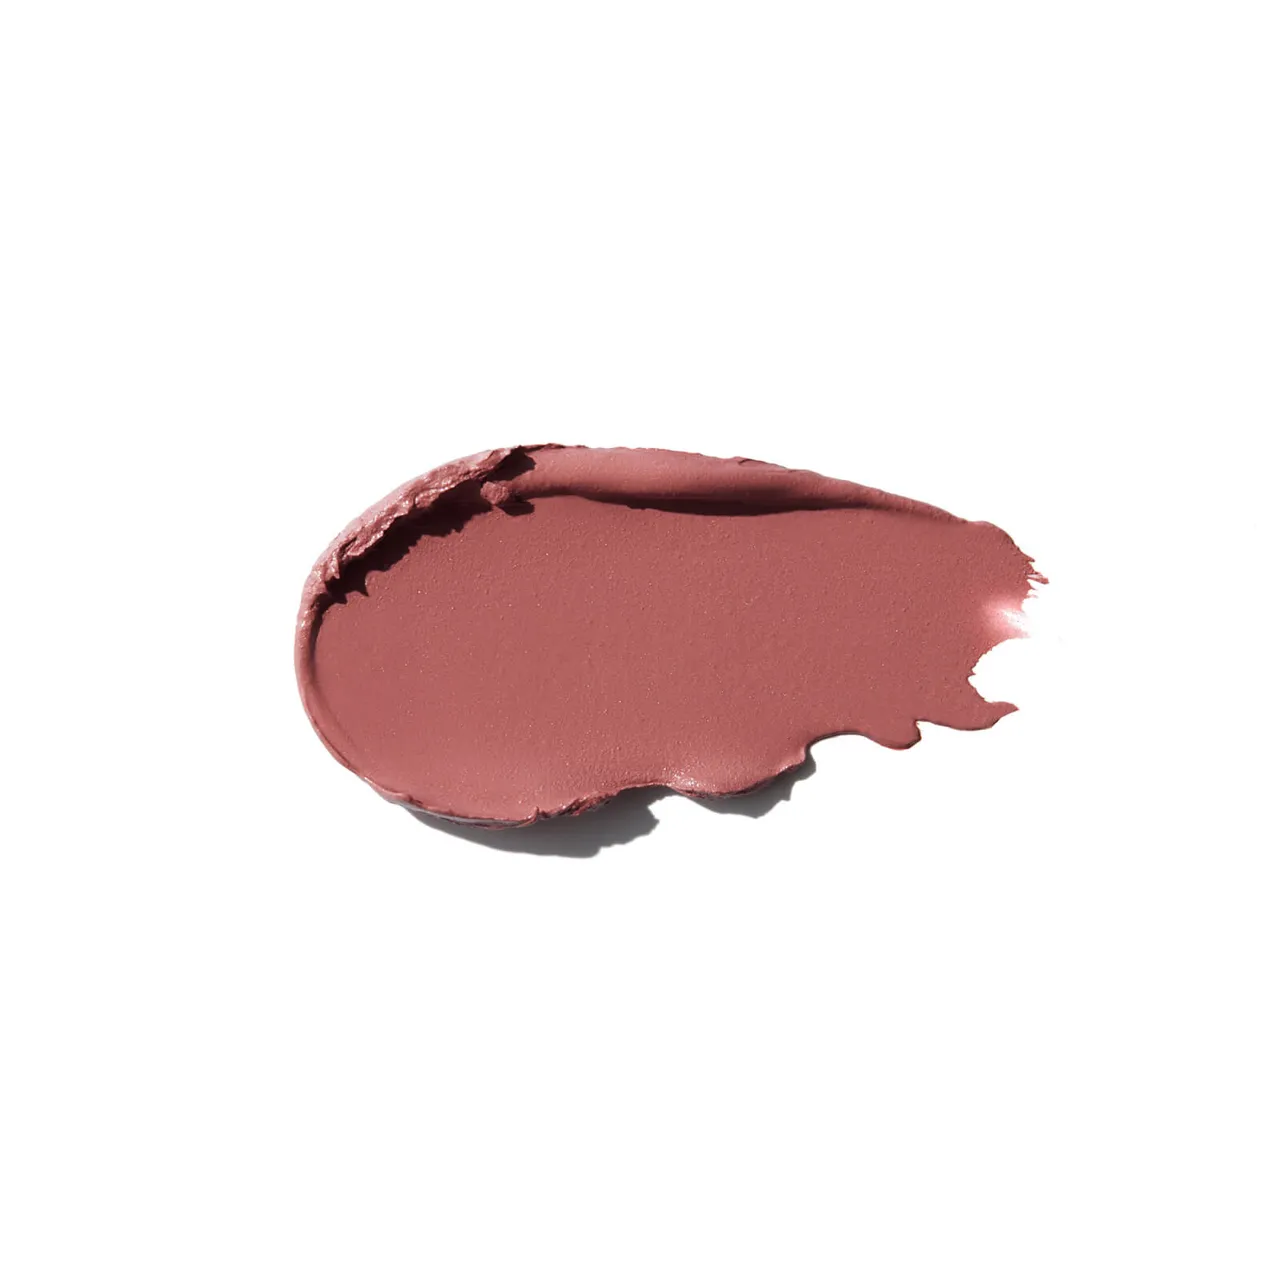 Anastasia Beverly Hills Satin Lipstick 3g (Various Colours) - Taupe Beige